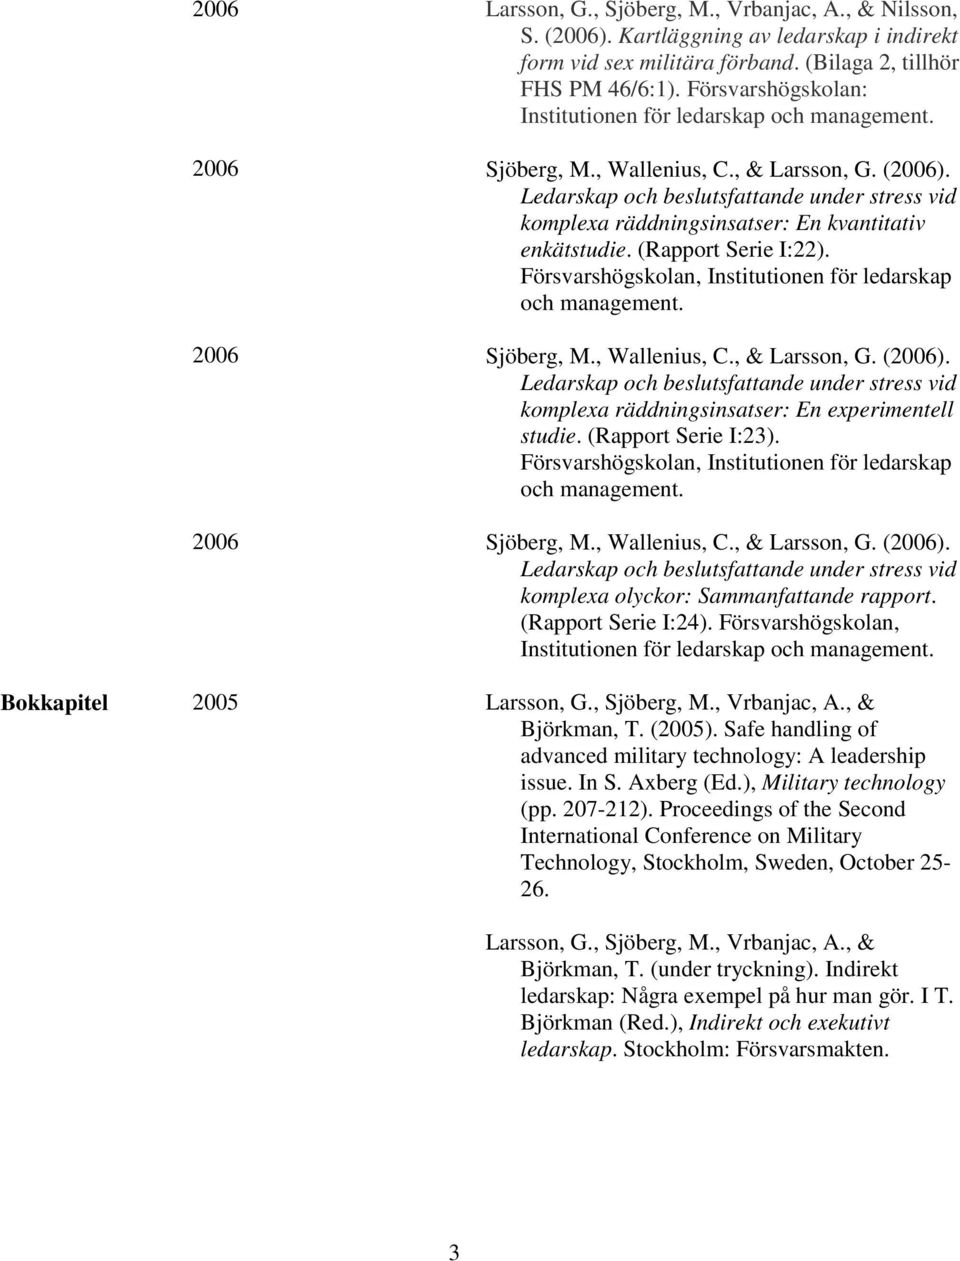 (Rapport Serie I:23). Sjöberg, M., Wallenius, C., & Larsson, G. (). komplexa olyckor: Sammanfattande rapport. (Rapport Serie I:24).